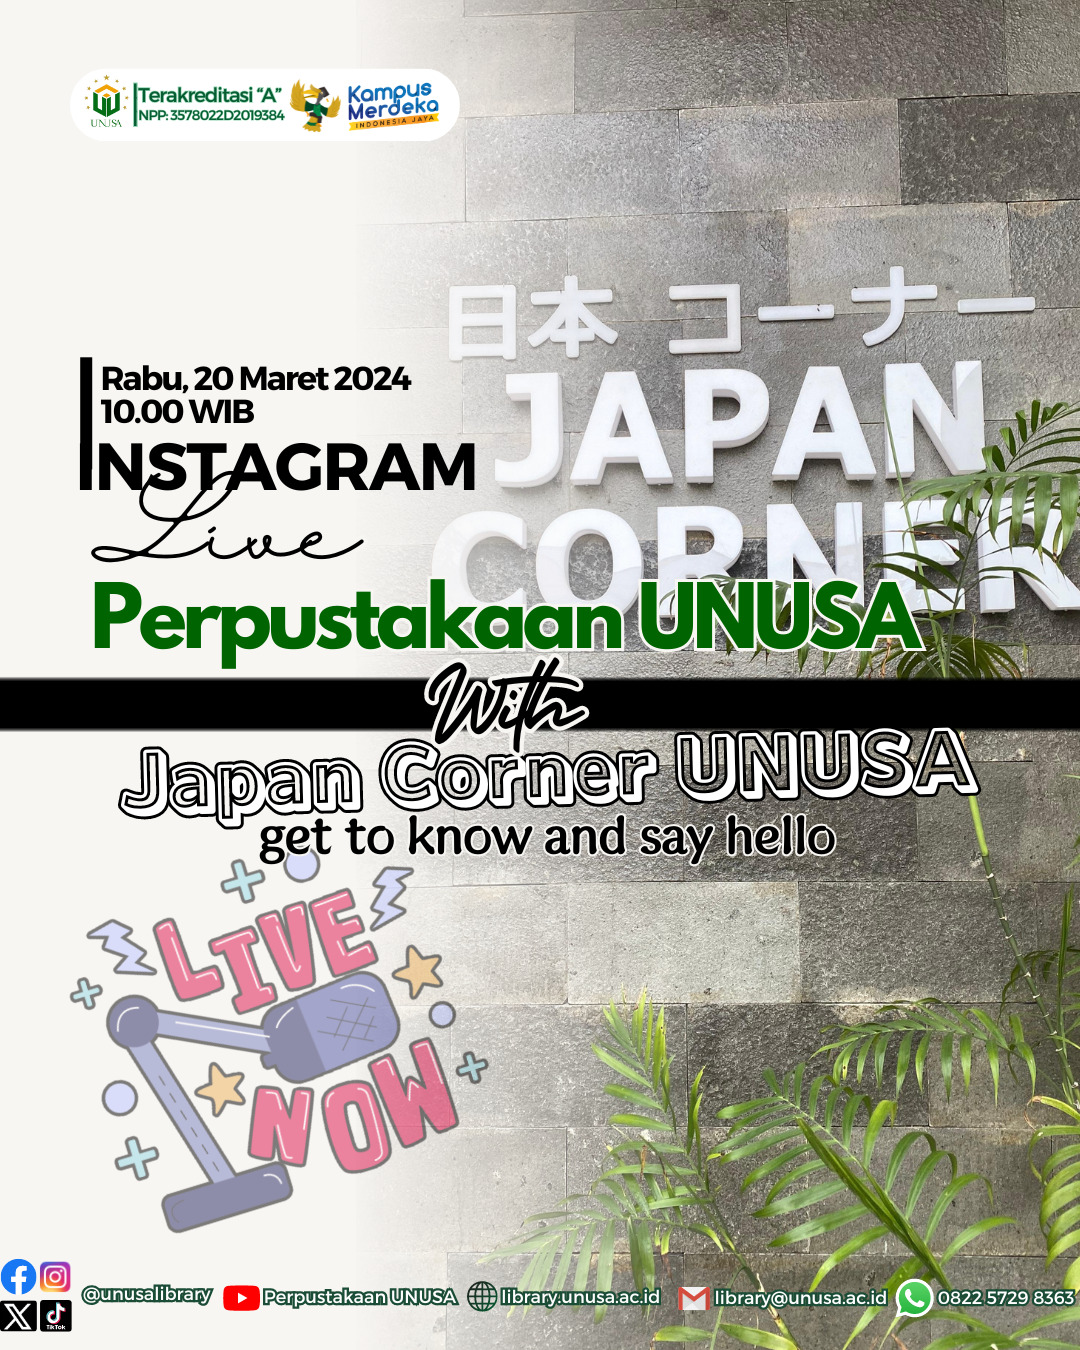 Live Unusa Library with Unusa Japan Corner